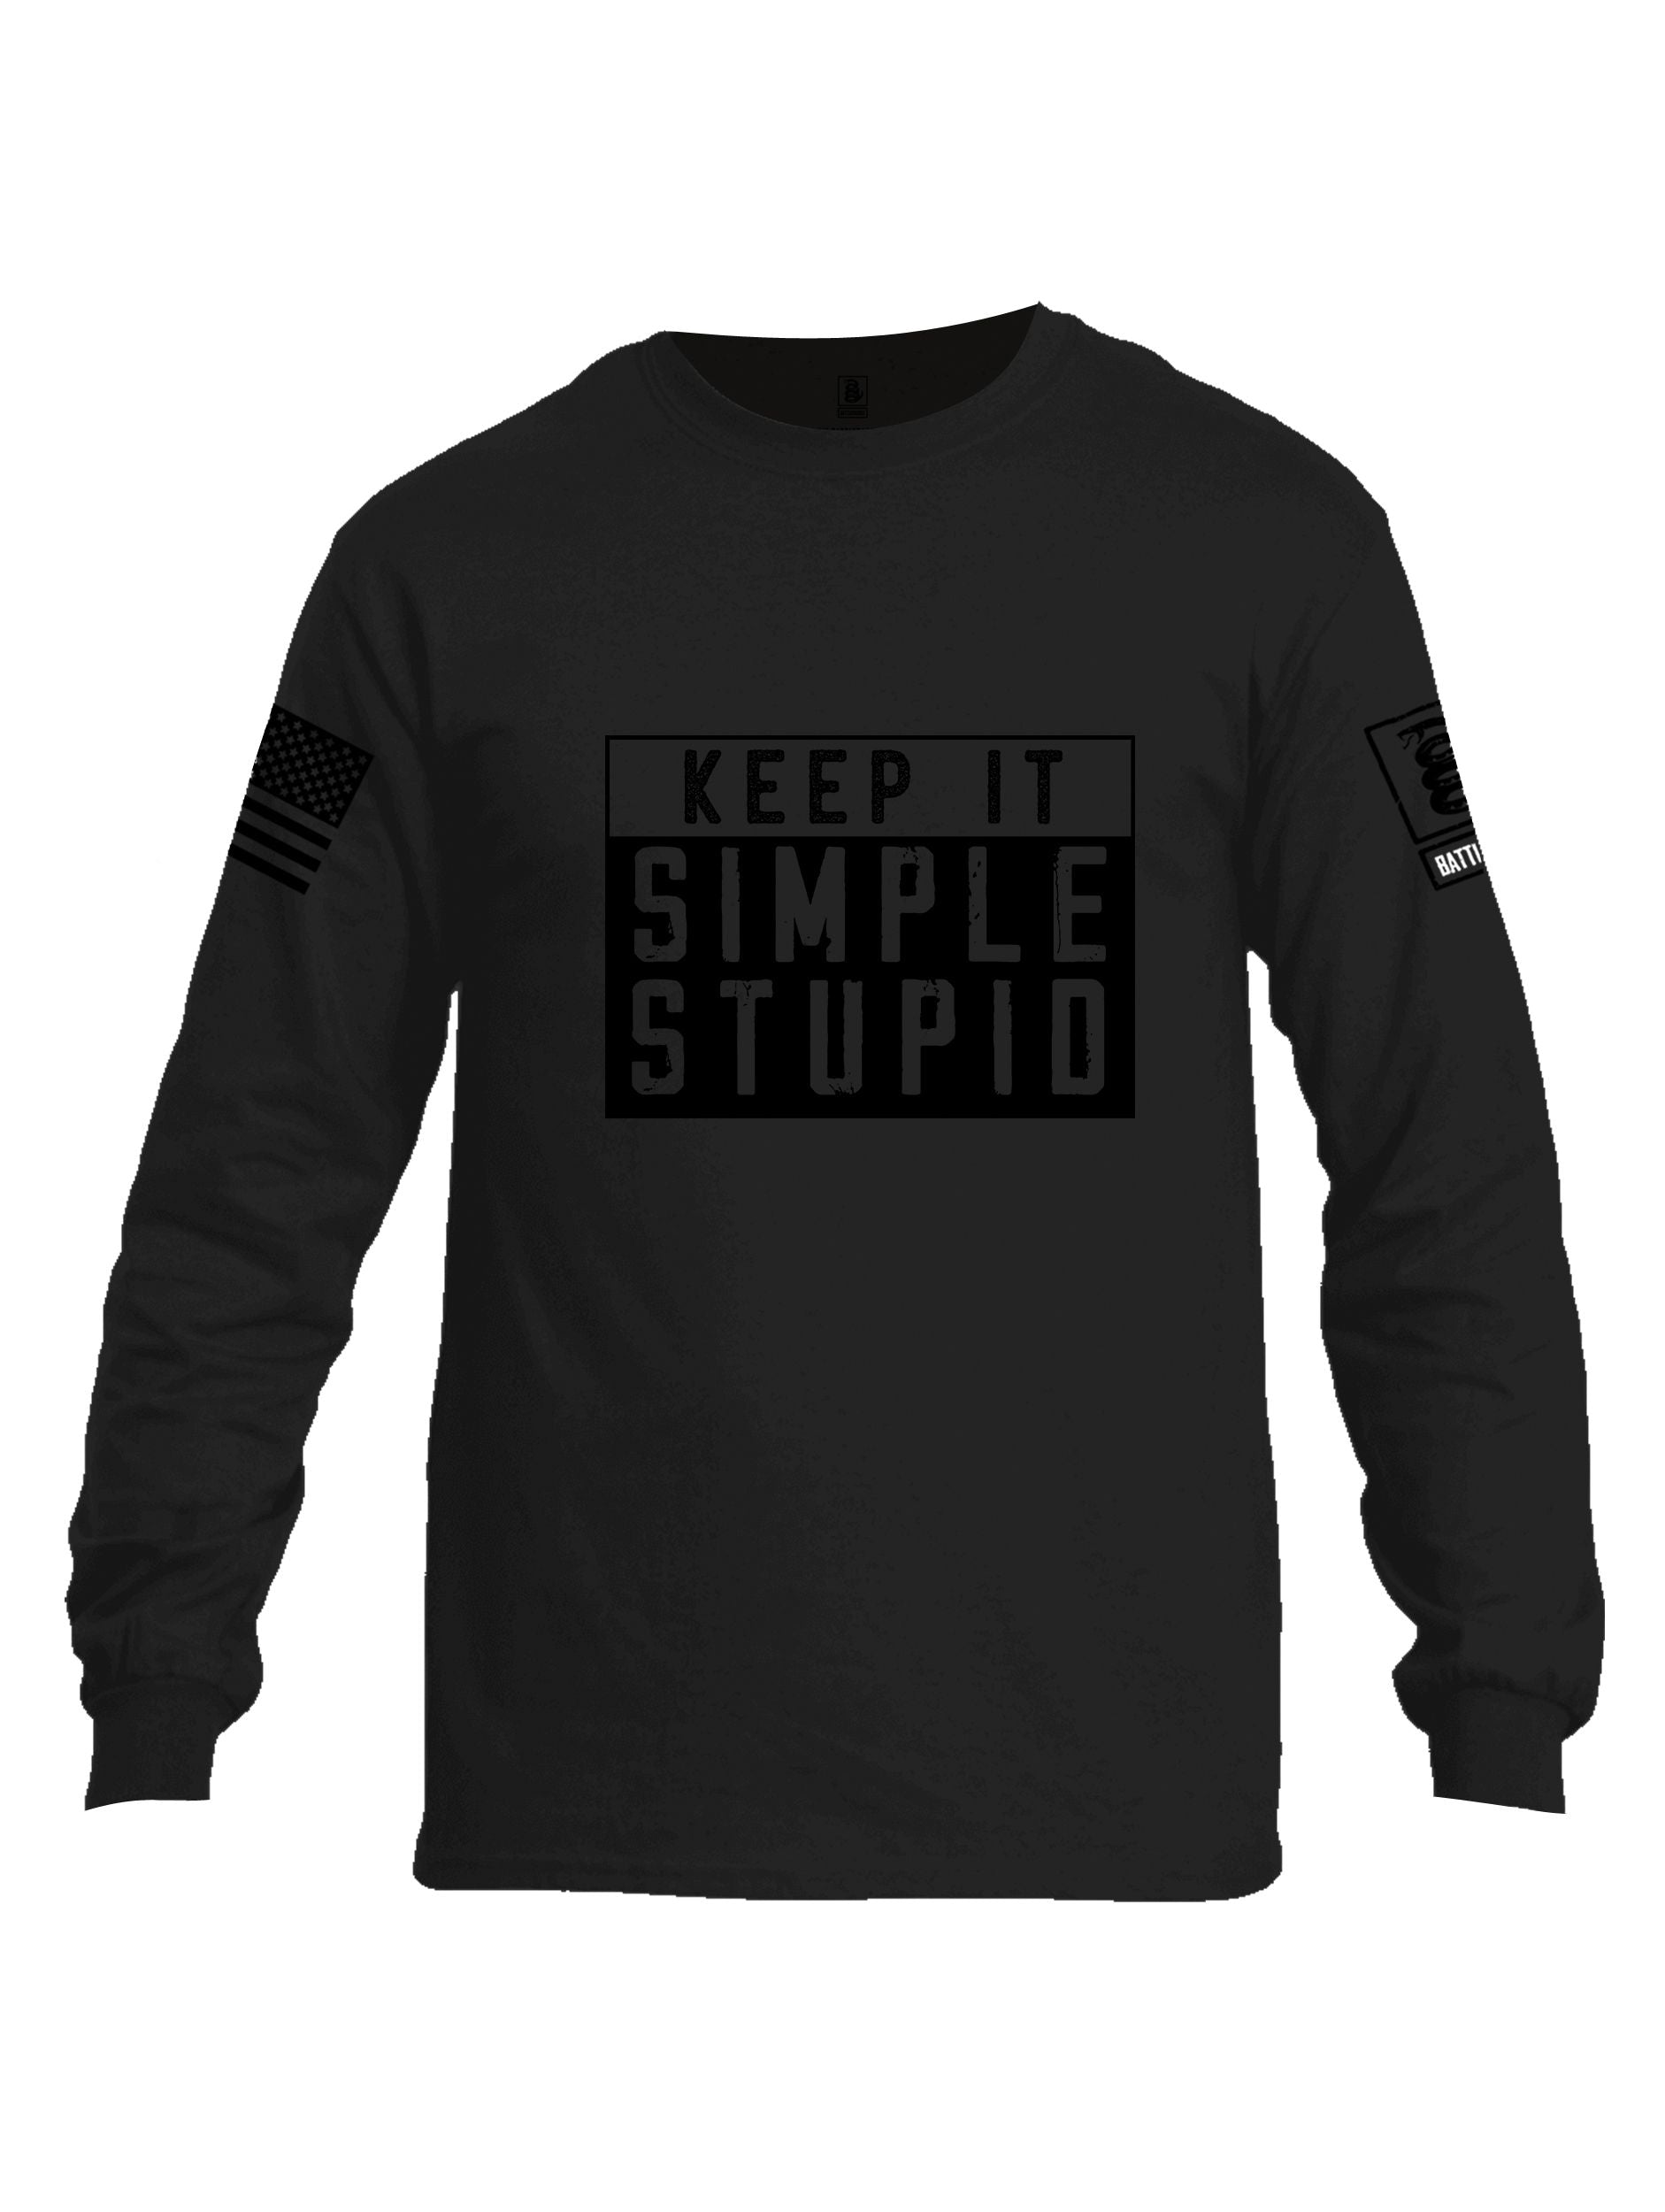 Battleraddle Keep It Simple Stupid   Black Sleeves Men Cotton Crew Neck Long Sleeve T Shirt